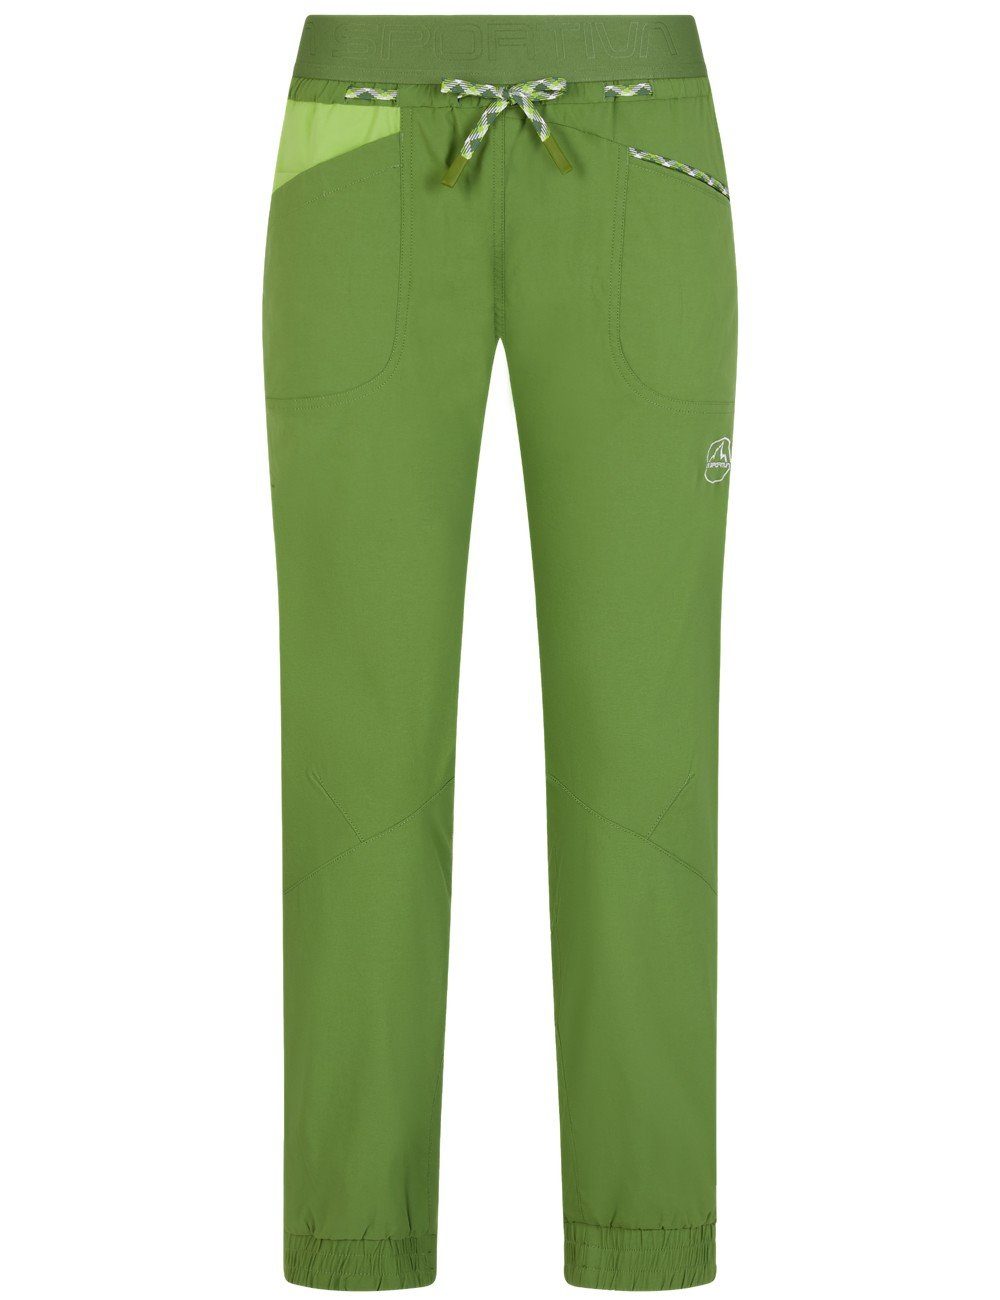 La Women Mantra kale/limegreen Sportiva Pant Trekkinghose